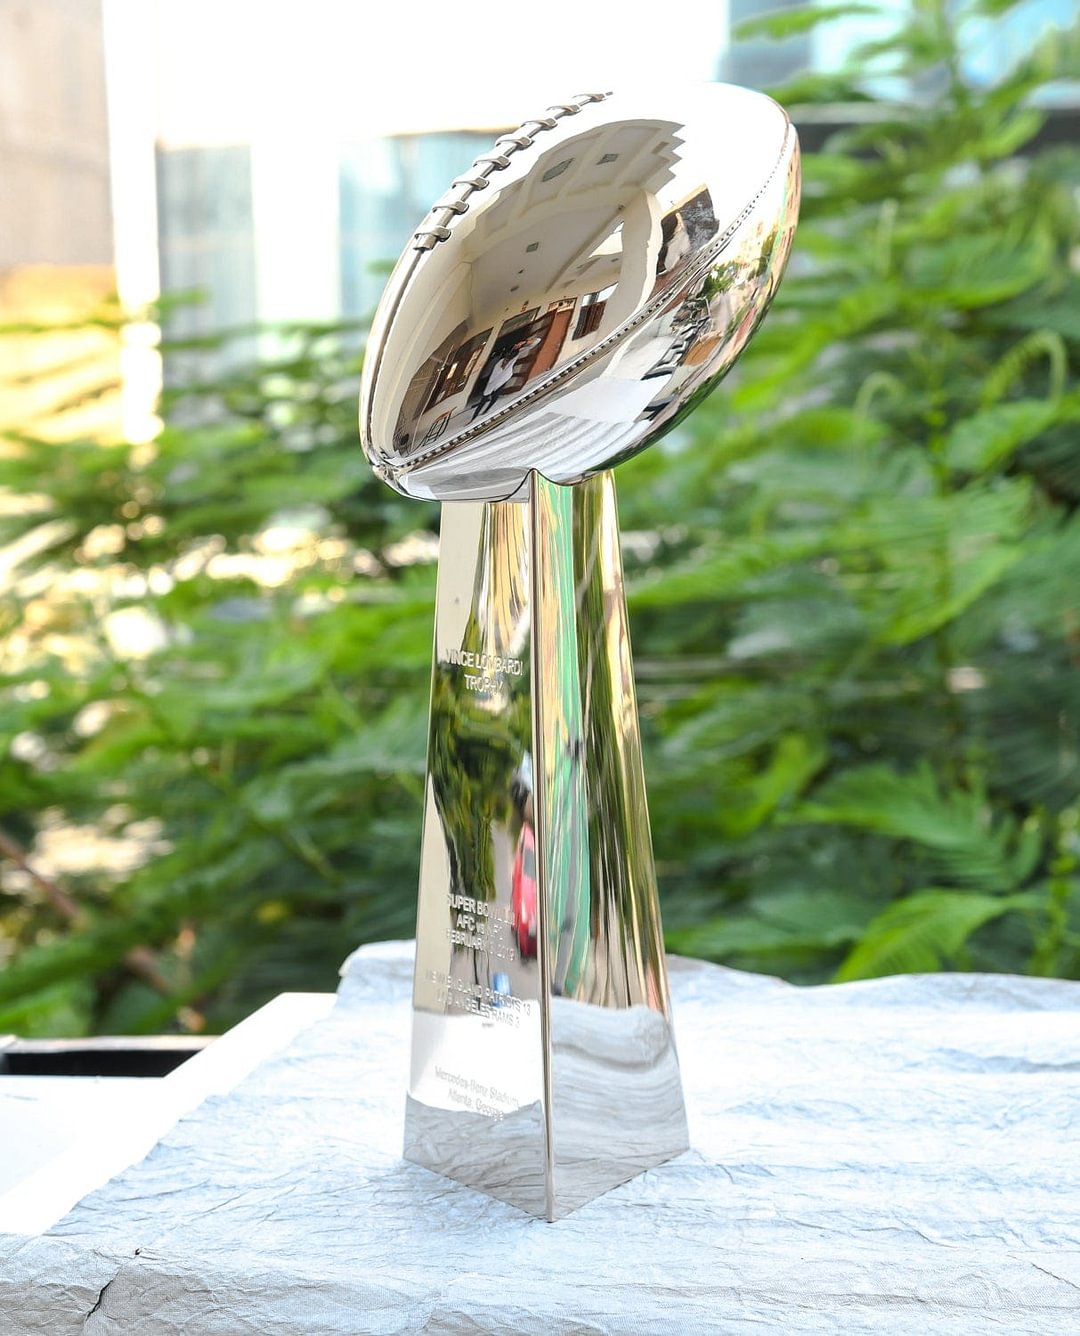 [NFL]2019 Vince Lombardi Trophy, Super Bowl 53, LIII New England Patriots